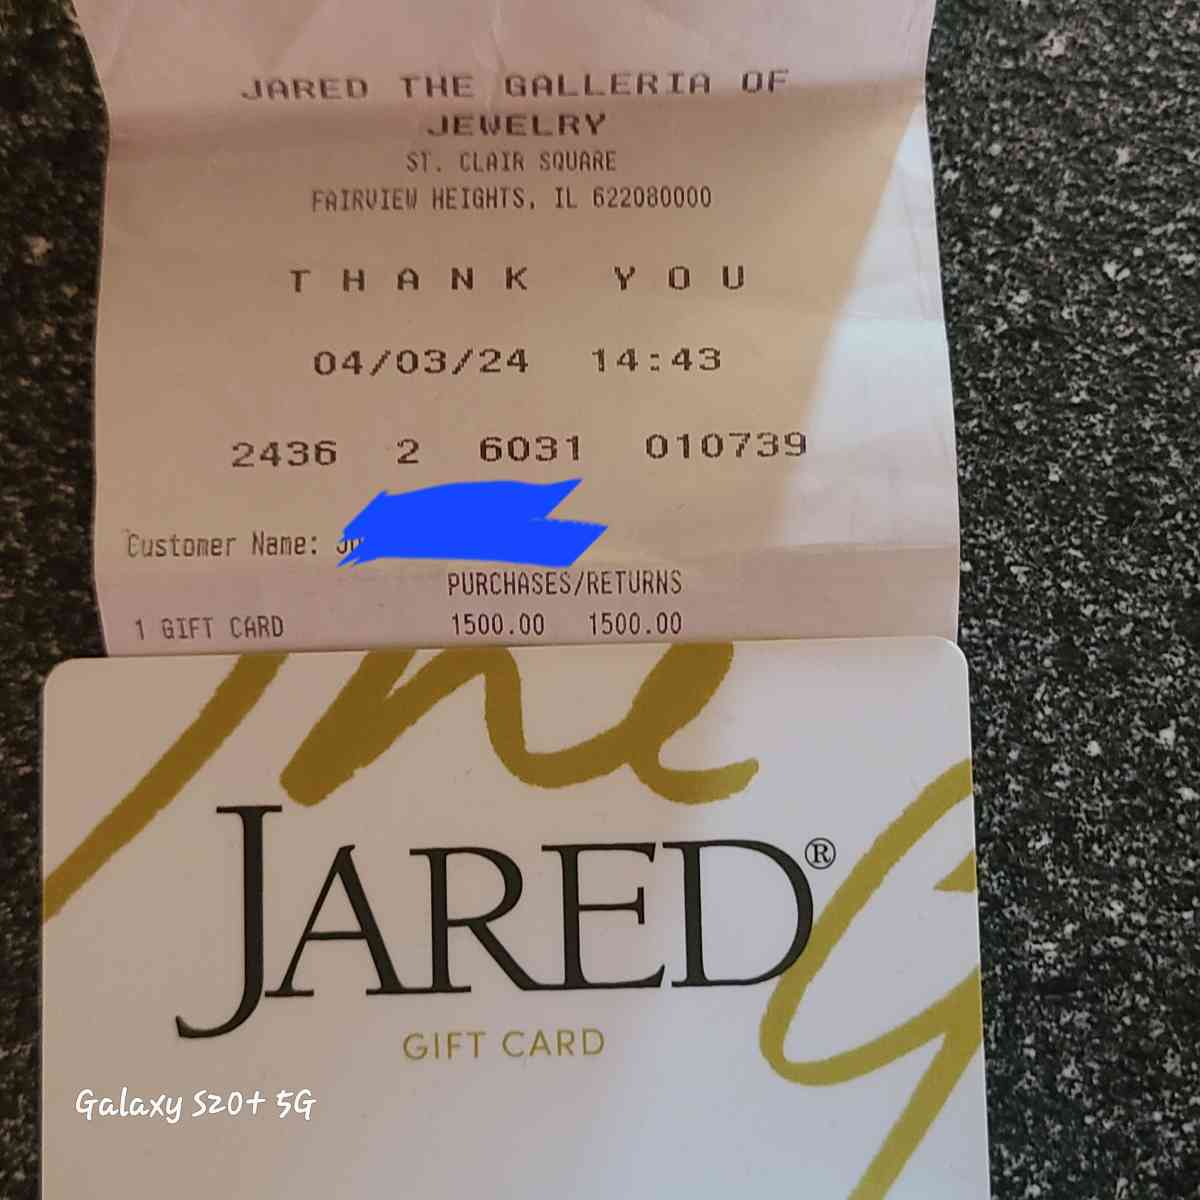 JARED GIFT CARD